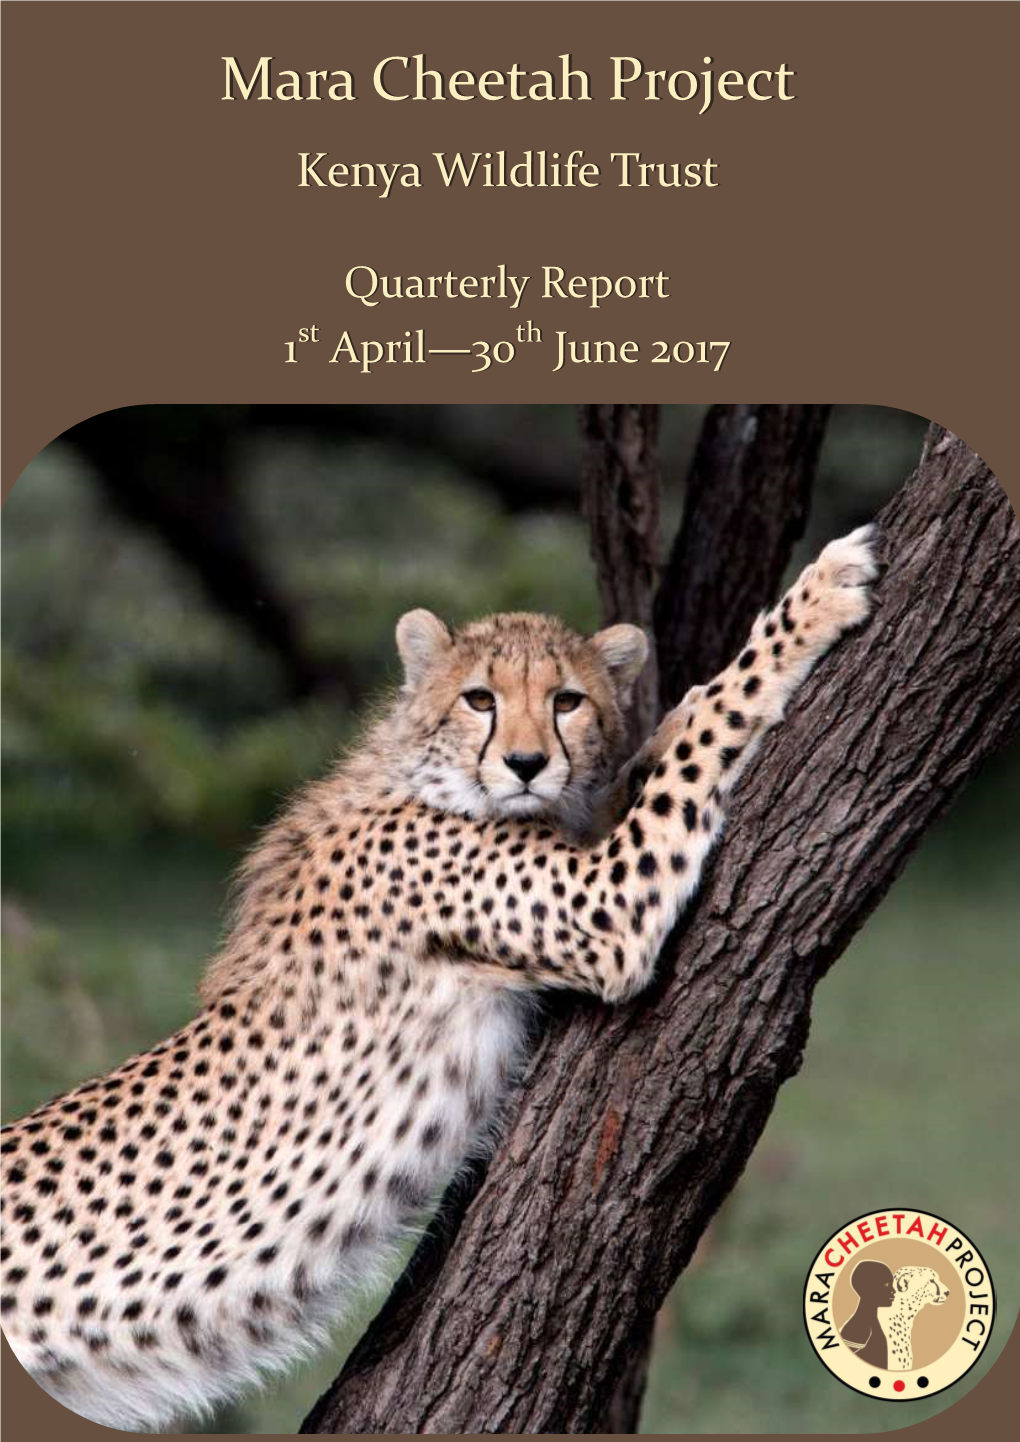 Mara Cheetah Project | Annual Report 2014 Maramara Cheetahcheetah Projectproject Kenyakenya Wildlifewildlife Trusttrust